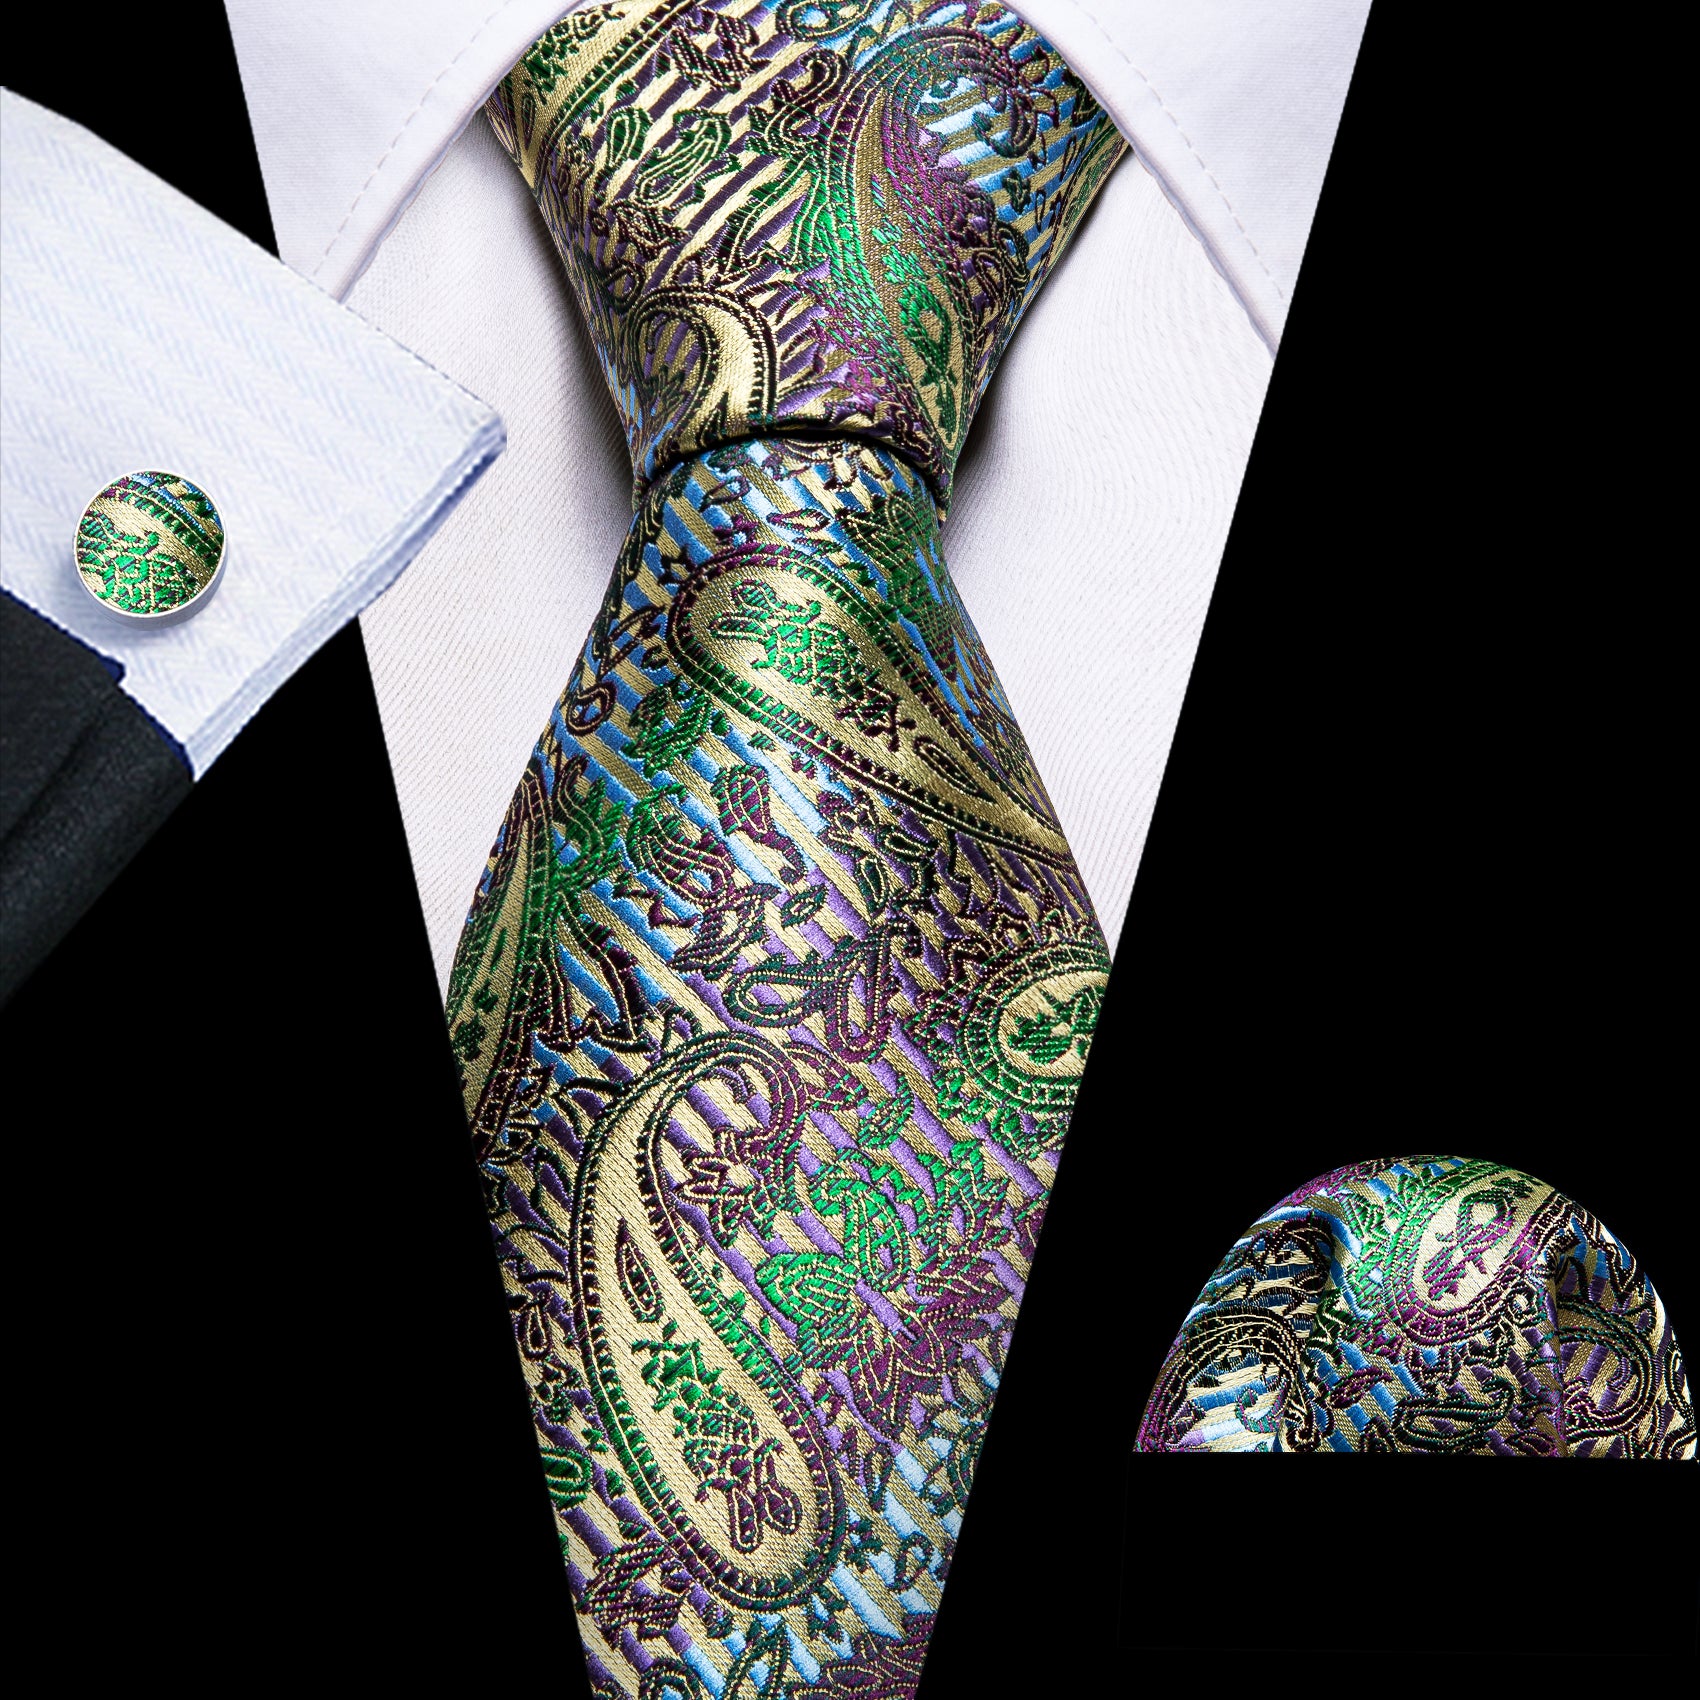 Colorful Paisley Silk Tie Pocket Square Cufflinks Set